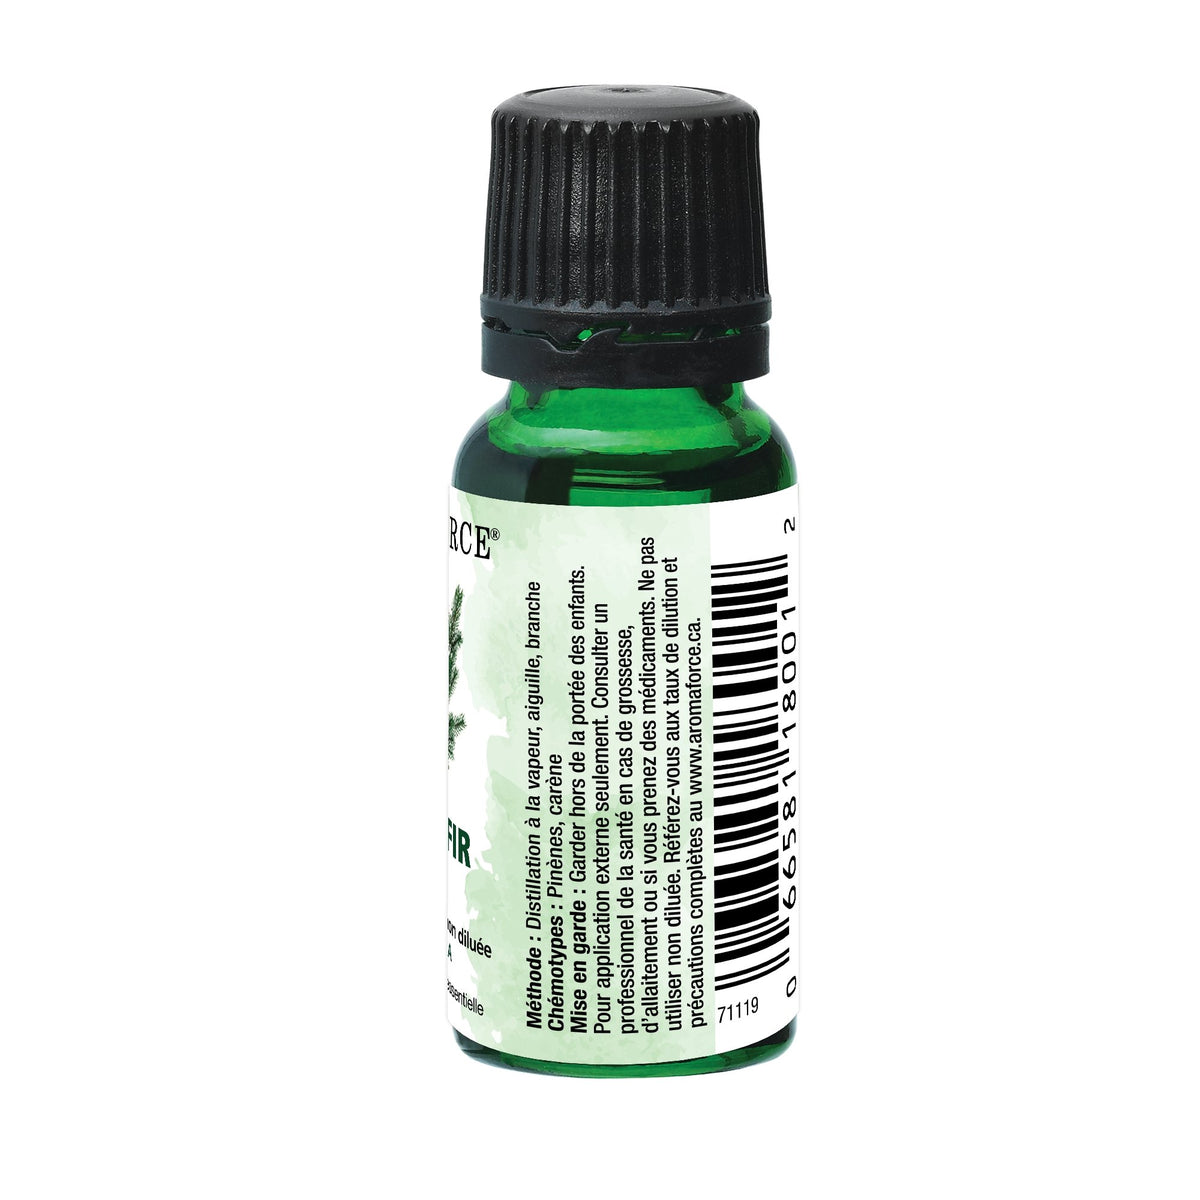 Aromaforce Balsam Fir Essential Oil 15mL - A.Vogel Canada